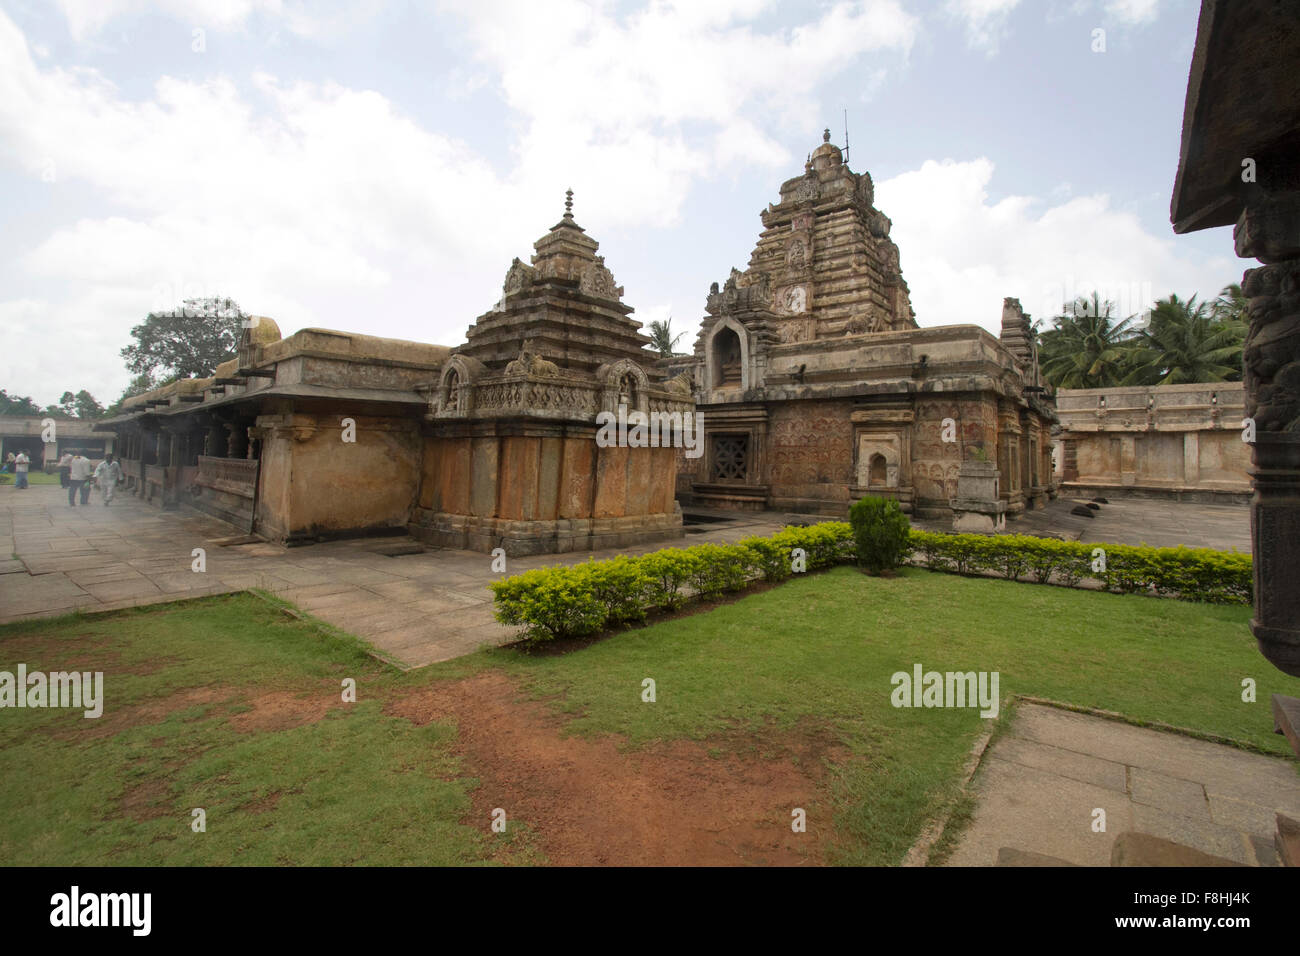 Tempelanlage in Banavasi, ein Tempel Weltkulturerbe in Sirsi in Karnataka. Stockfoto